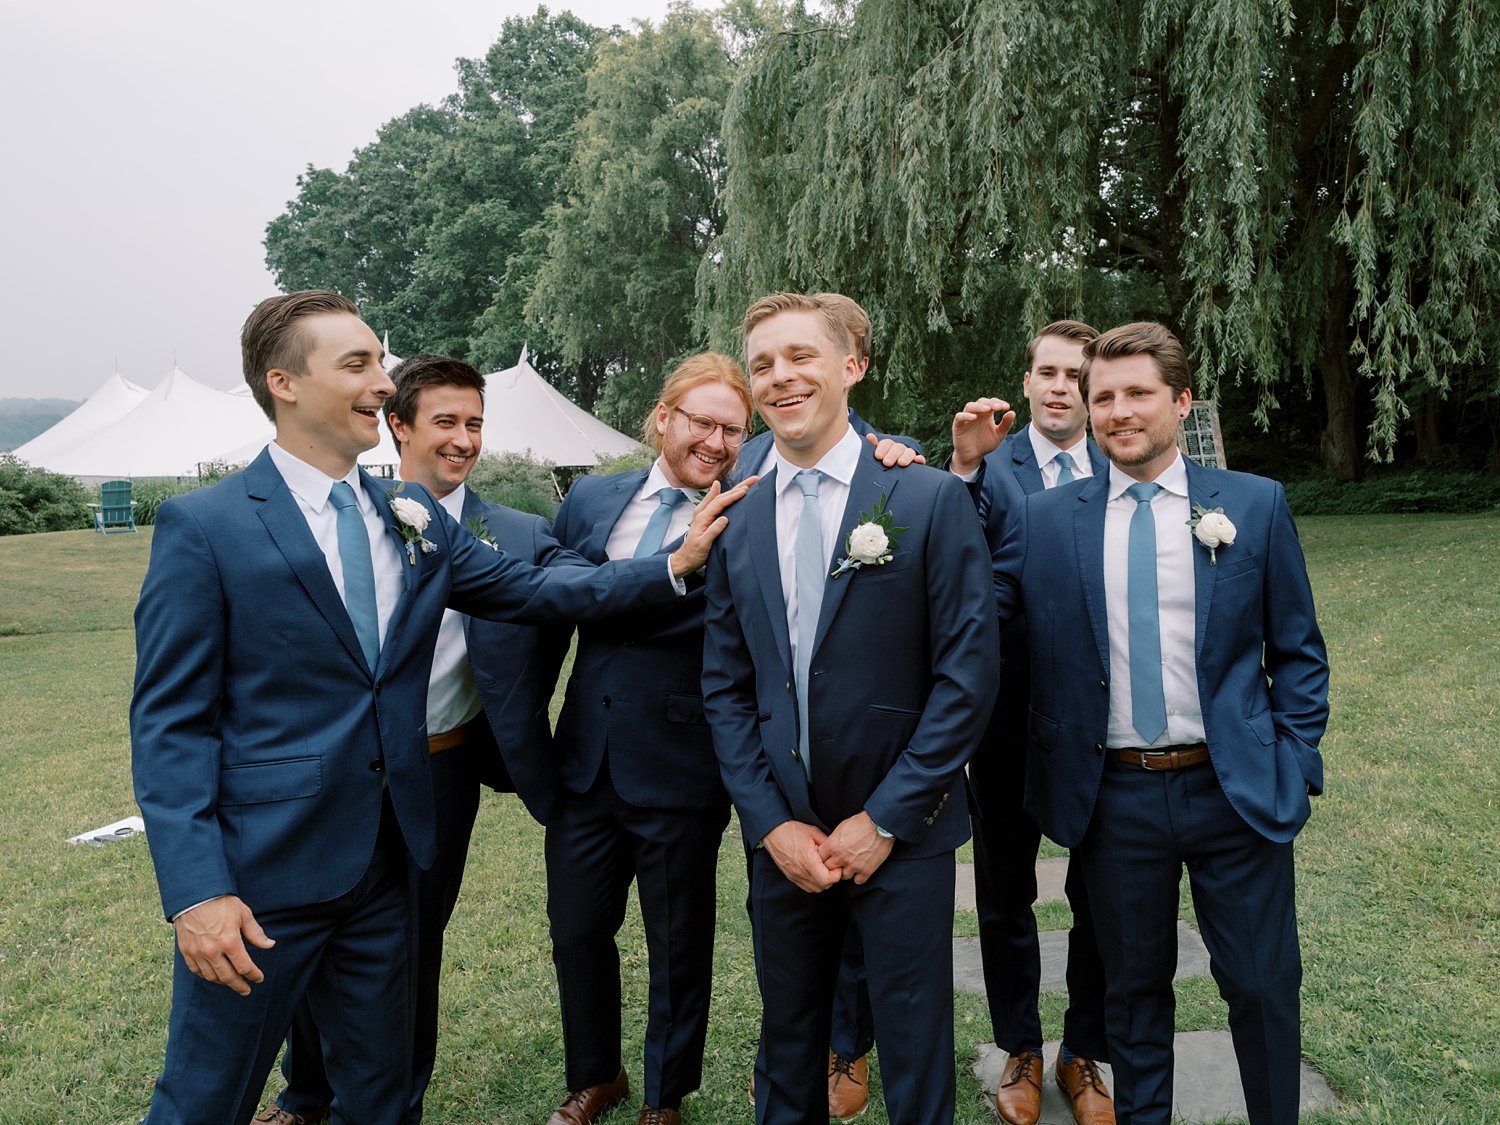 groom laughs with groomsmen in navy suits 